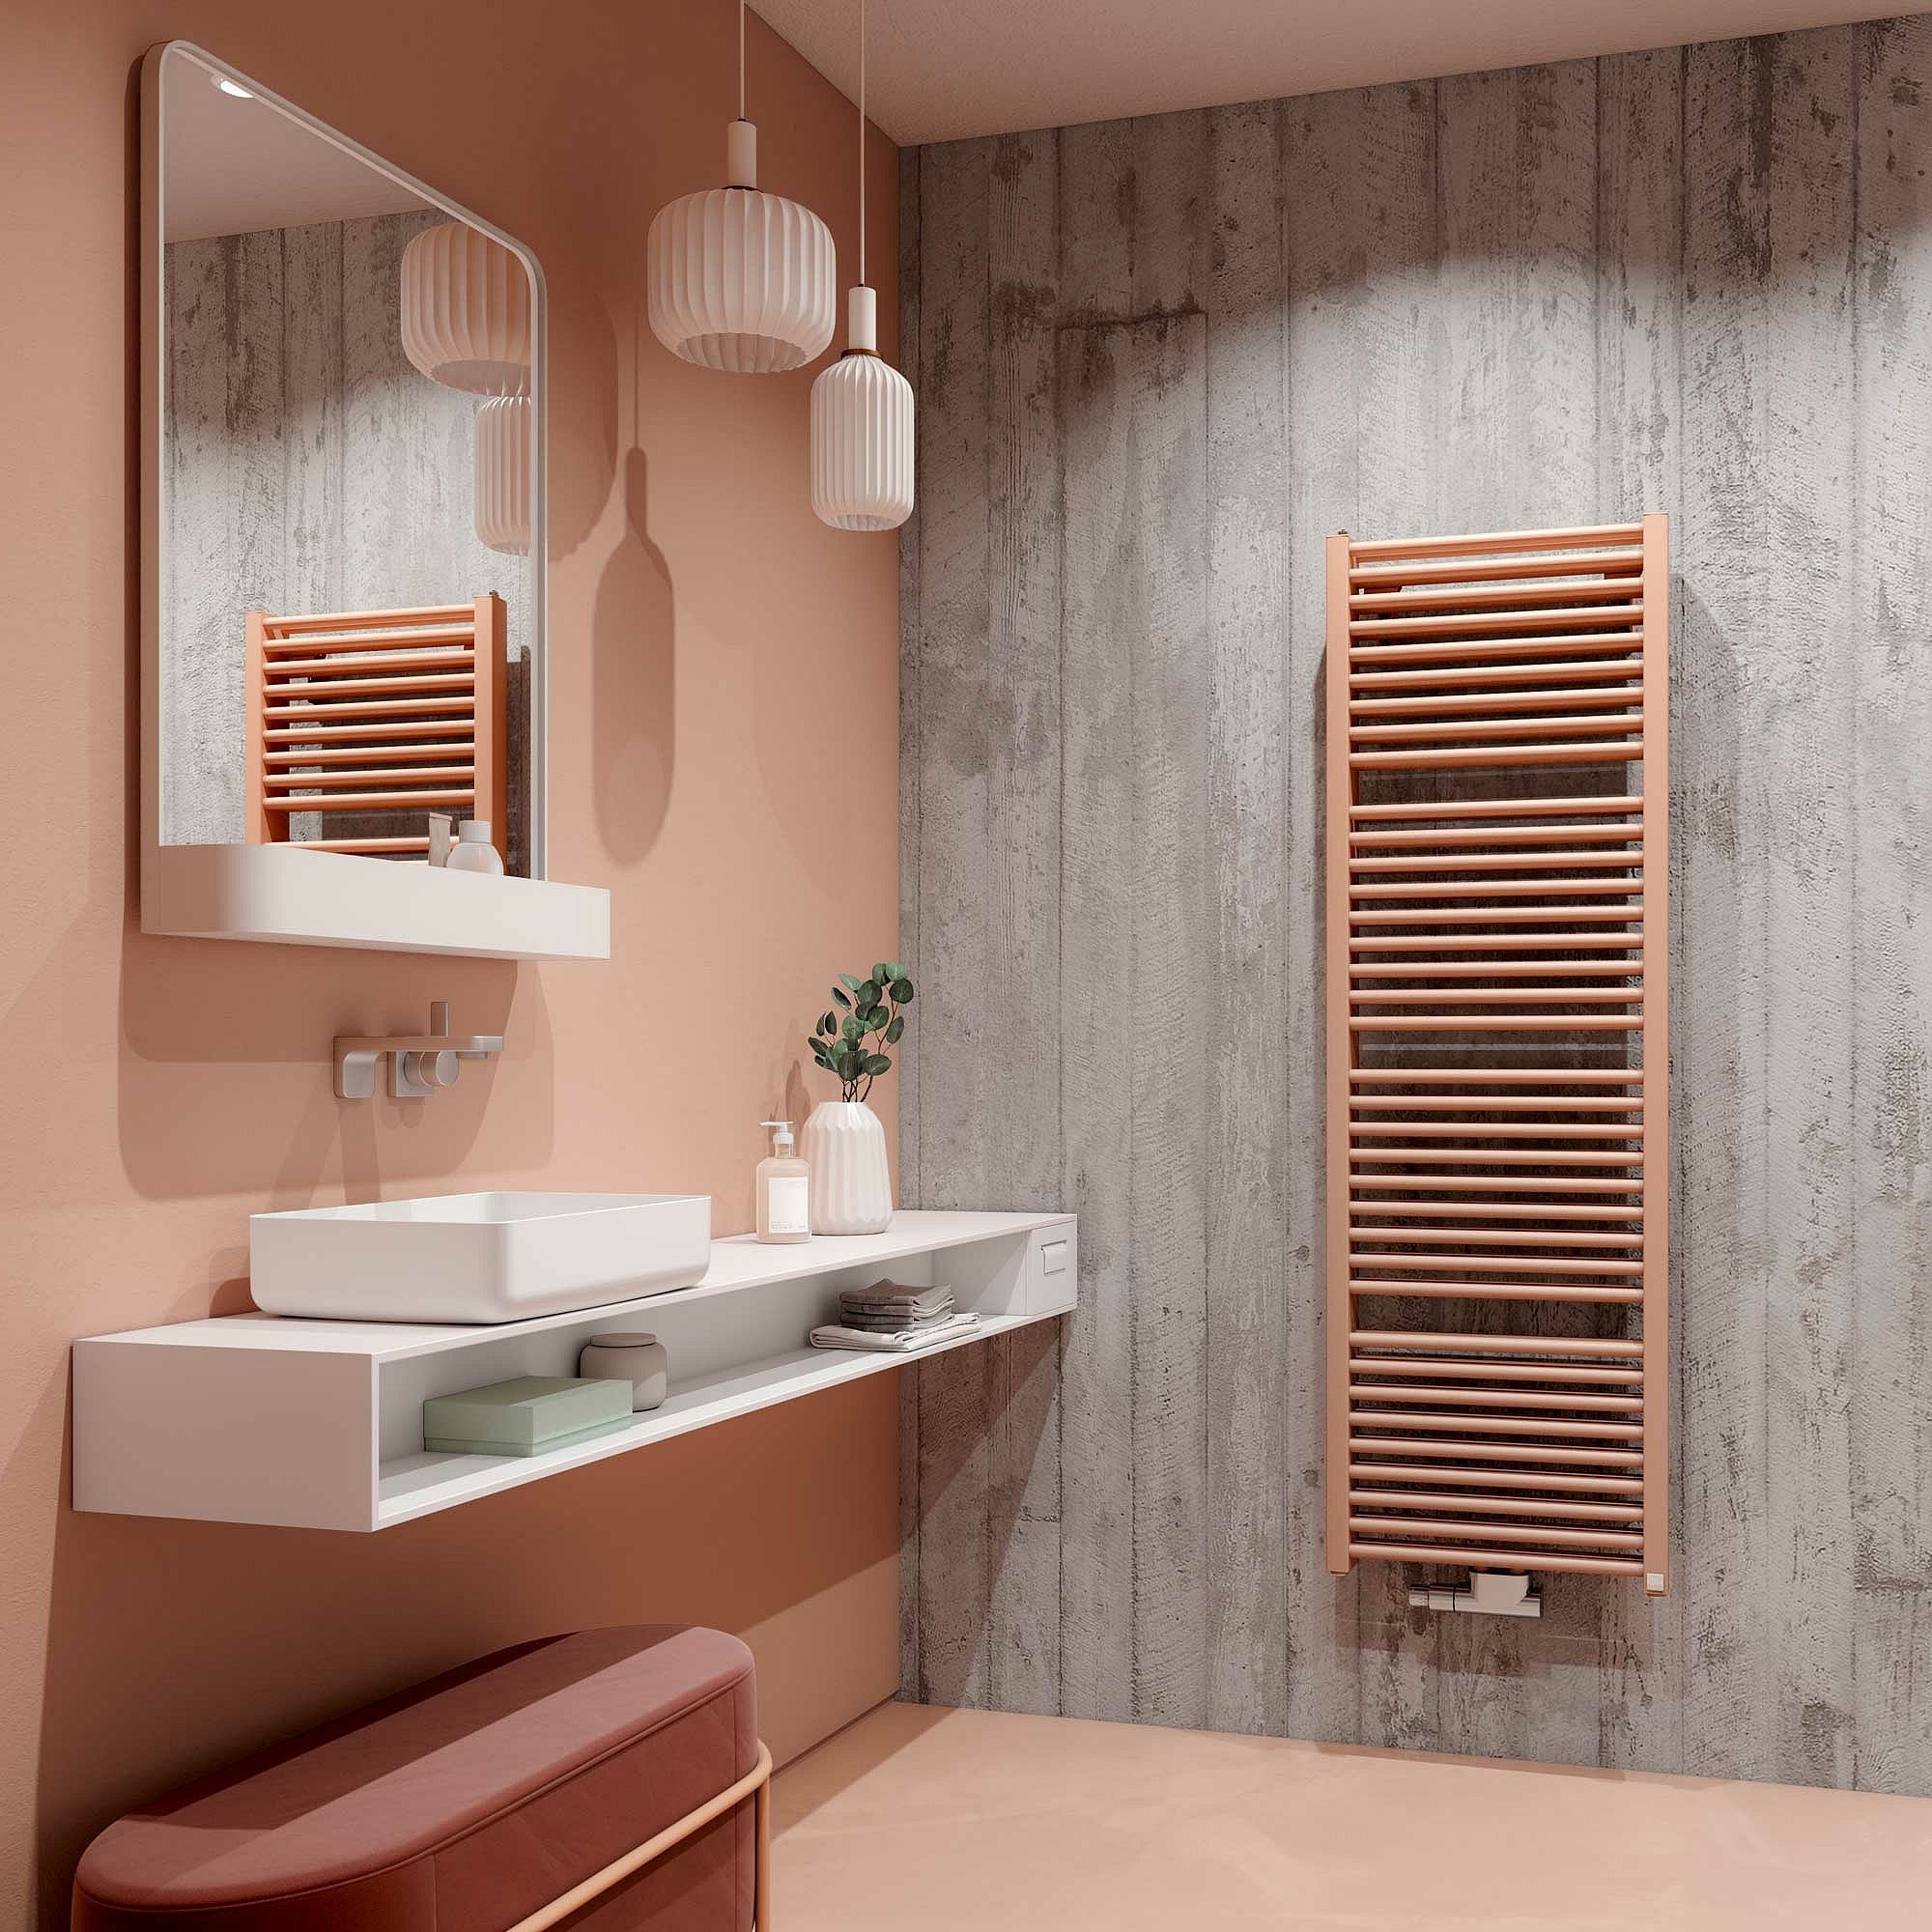 Kermi Duett design and bathroom radiators – classic bathroom heating design with double the power.